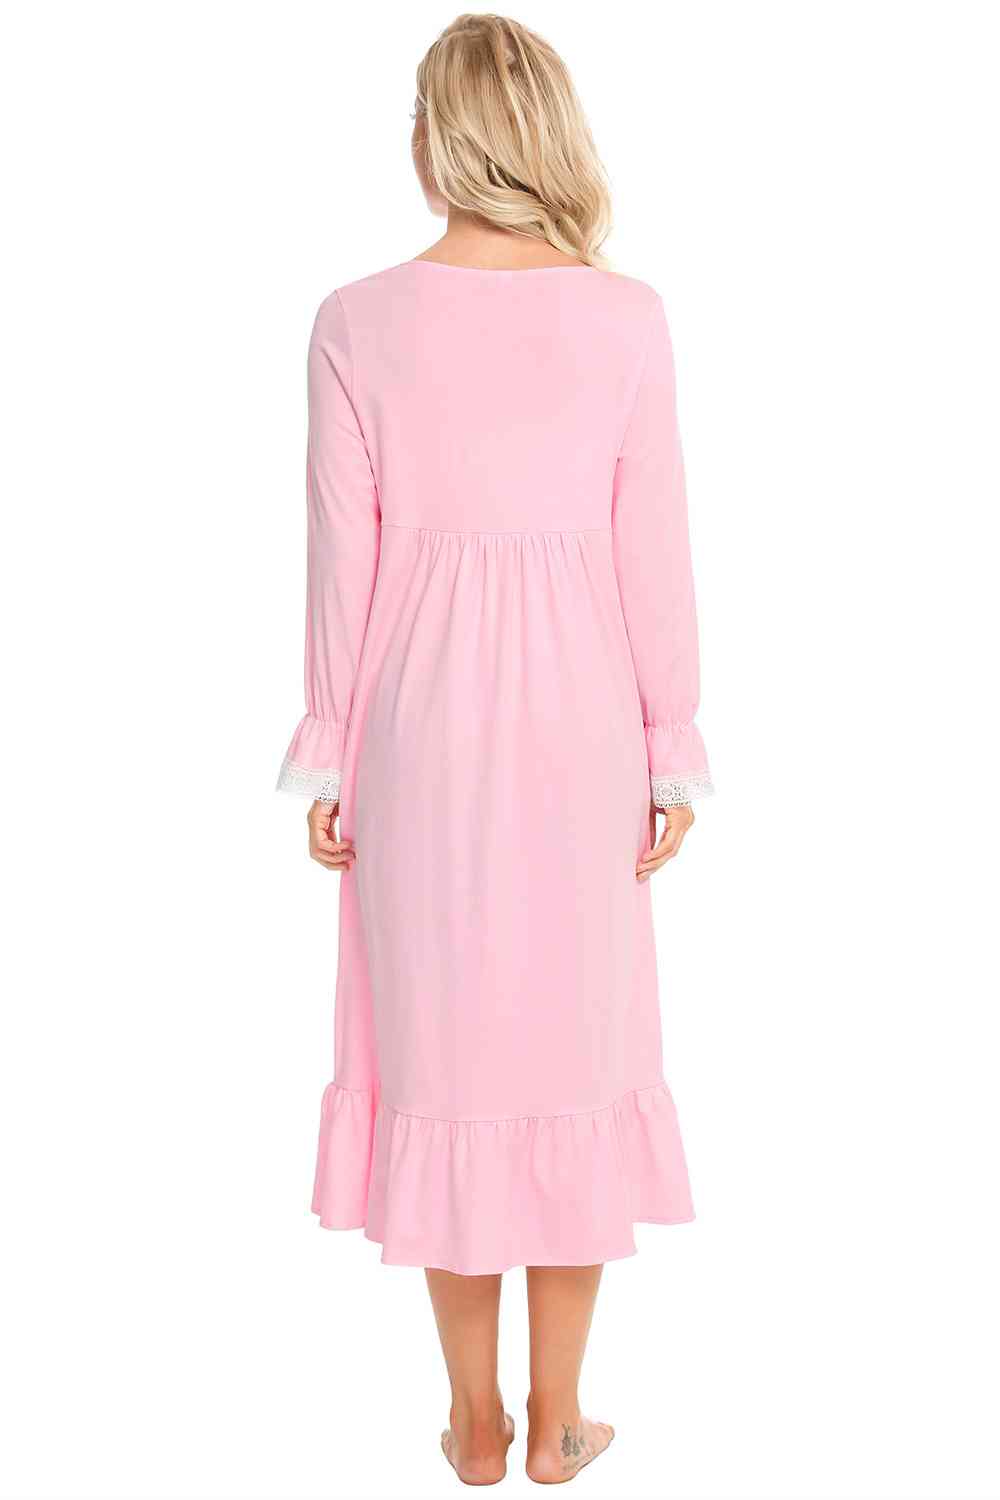 Lace Detail Square Neck Flounce Sleeve Night Dress - Sufyaa